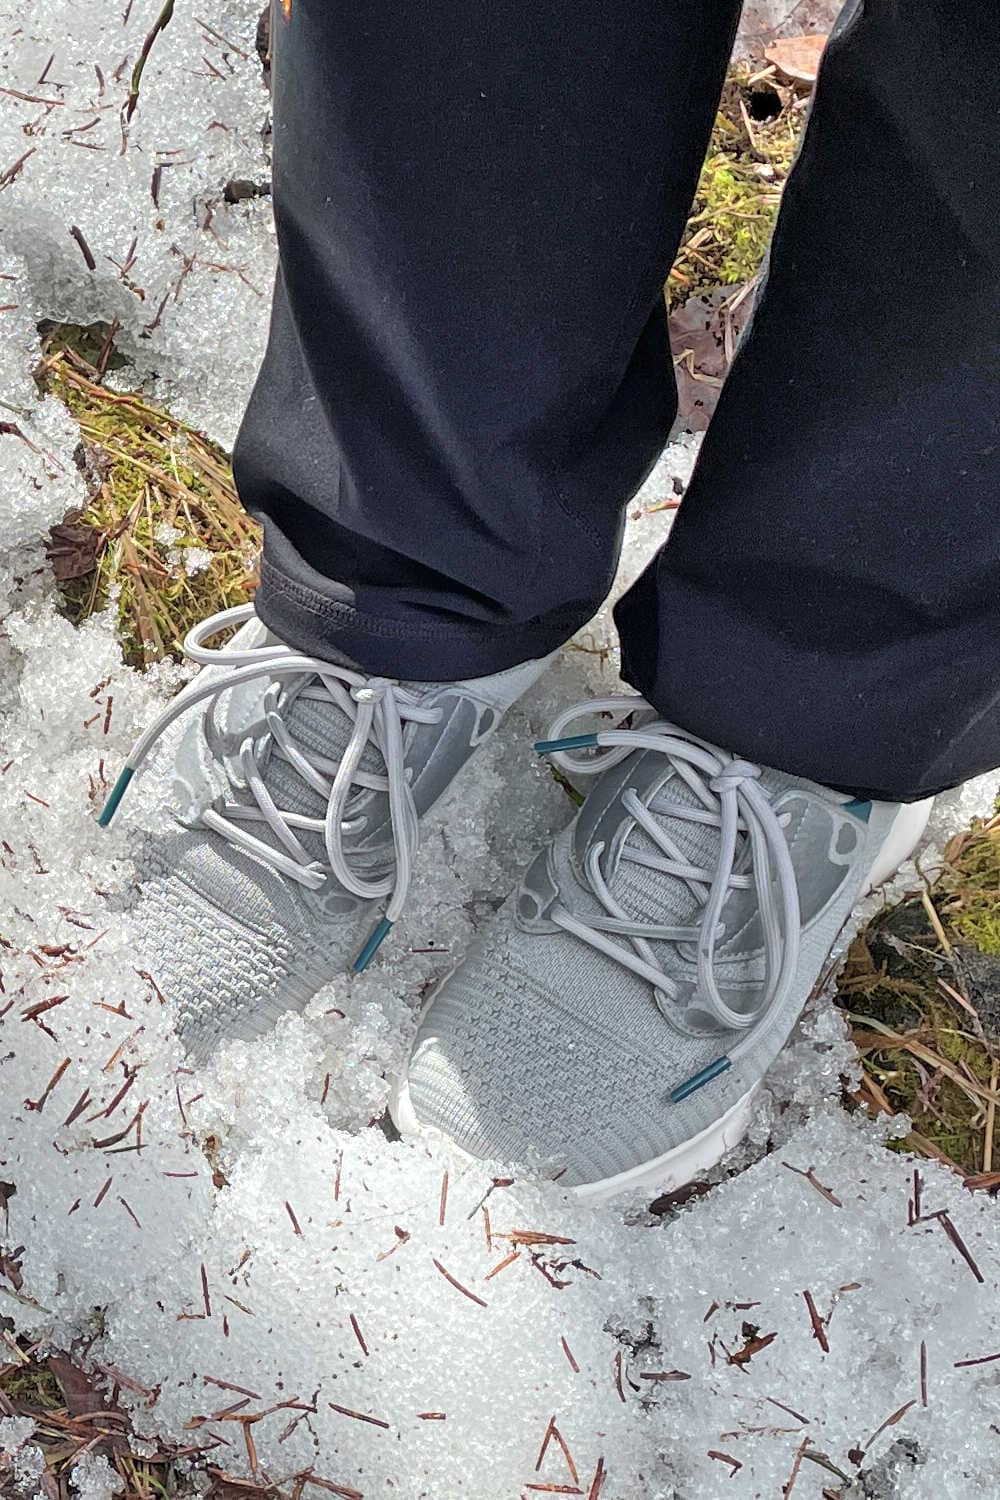 Wearing my Vessi waterproof shoes at Mendenhall Glacier